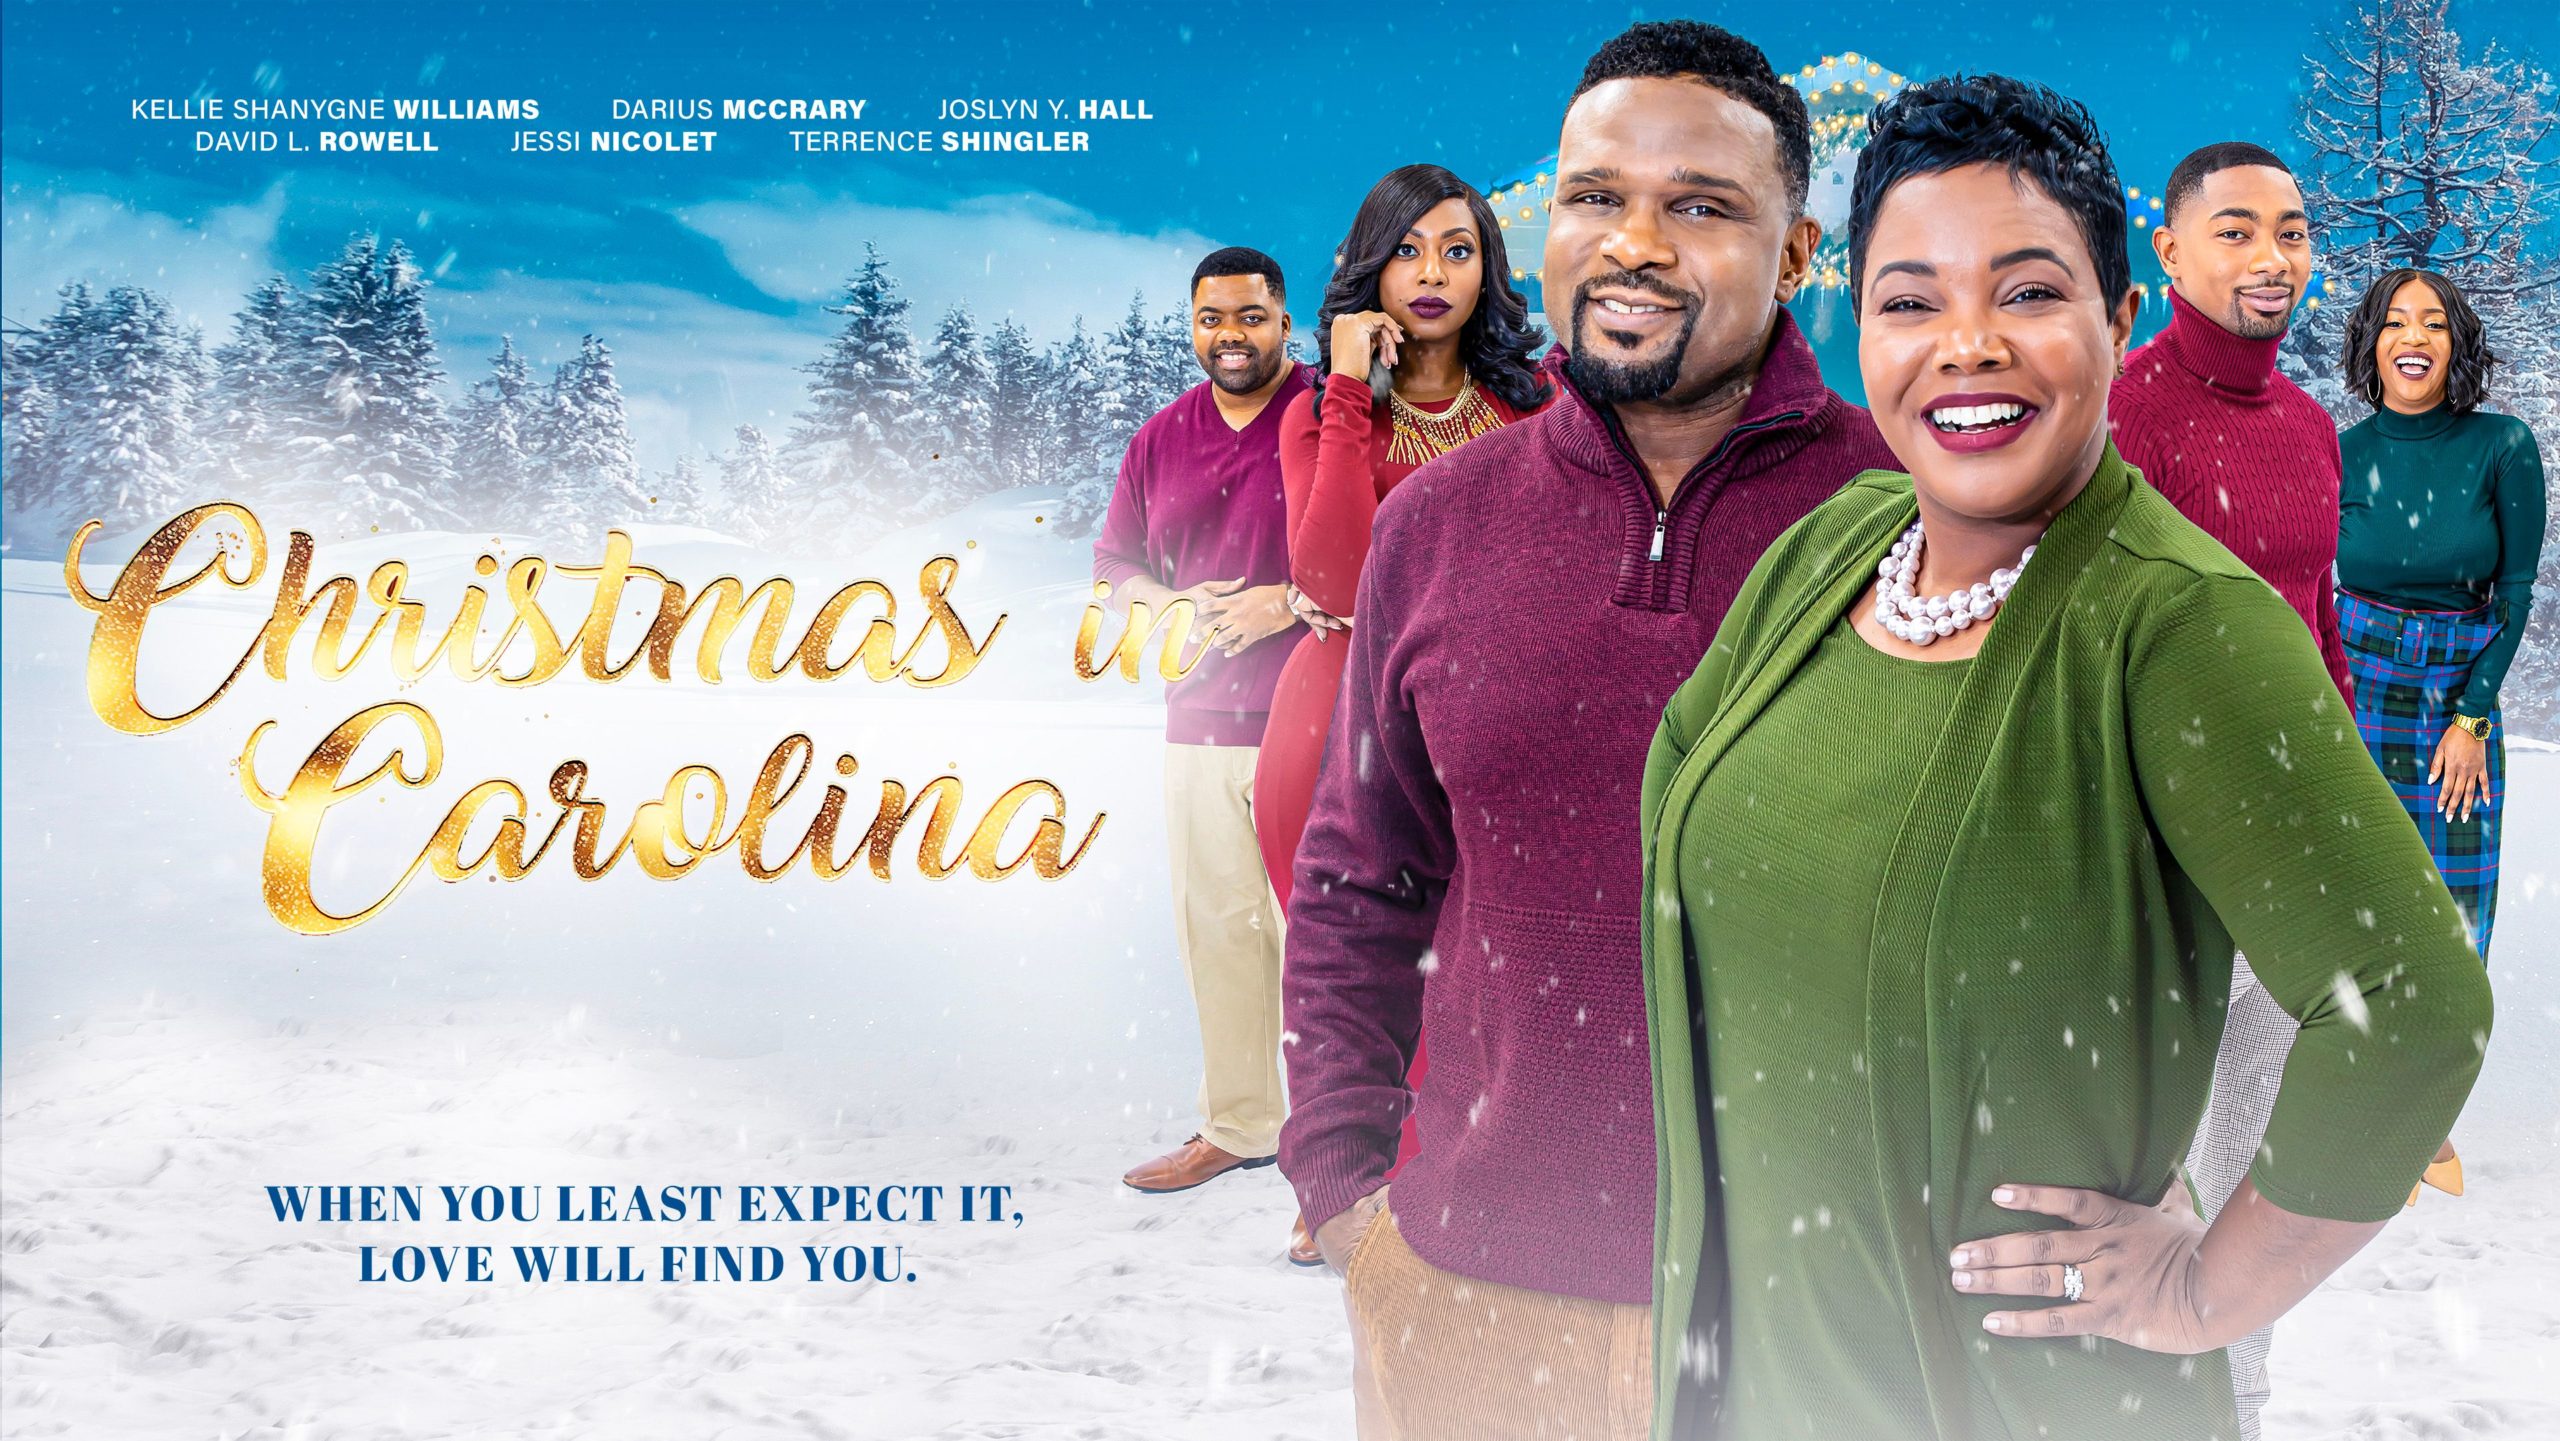 ChristmasinCarolina-horizontal-1024x577 Christmas In Carolina - A Black Holiday Movie This Holiday Season